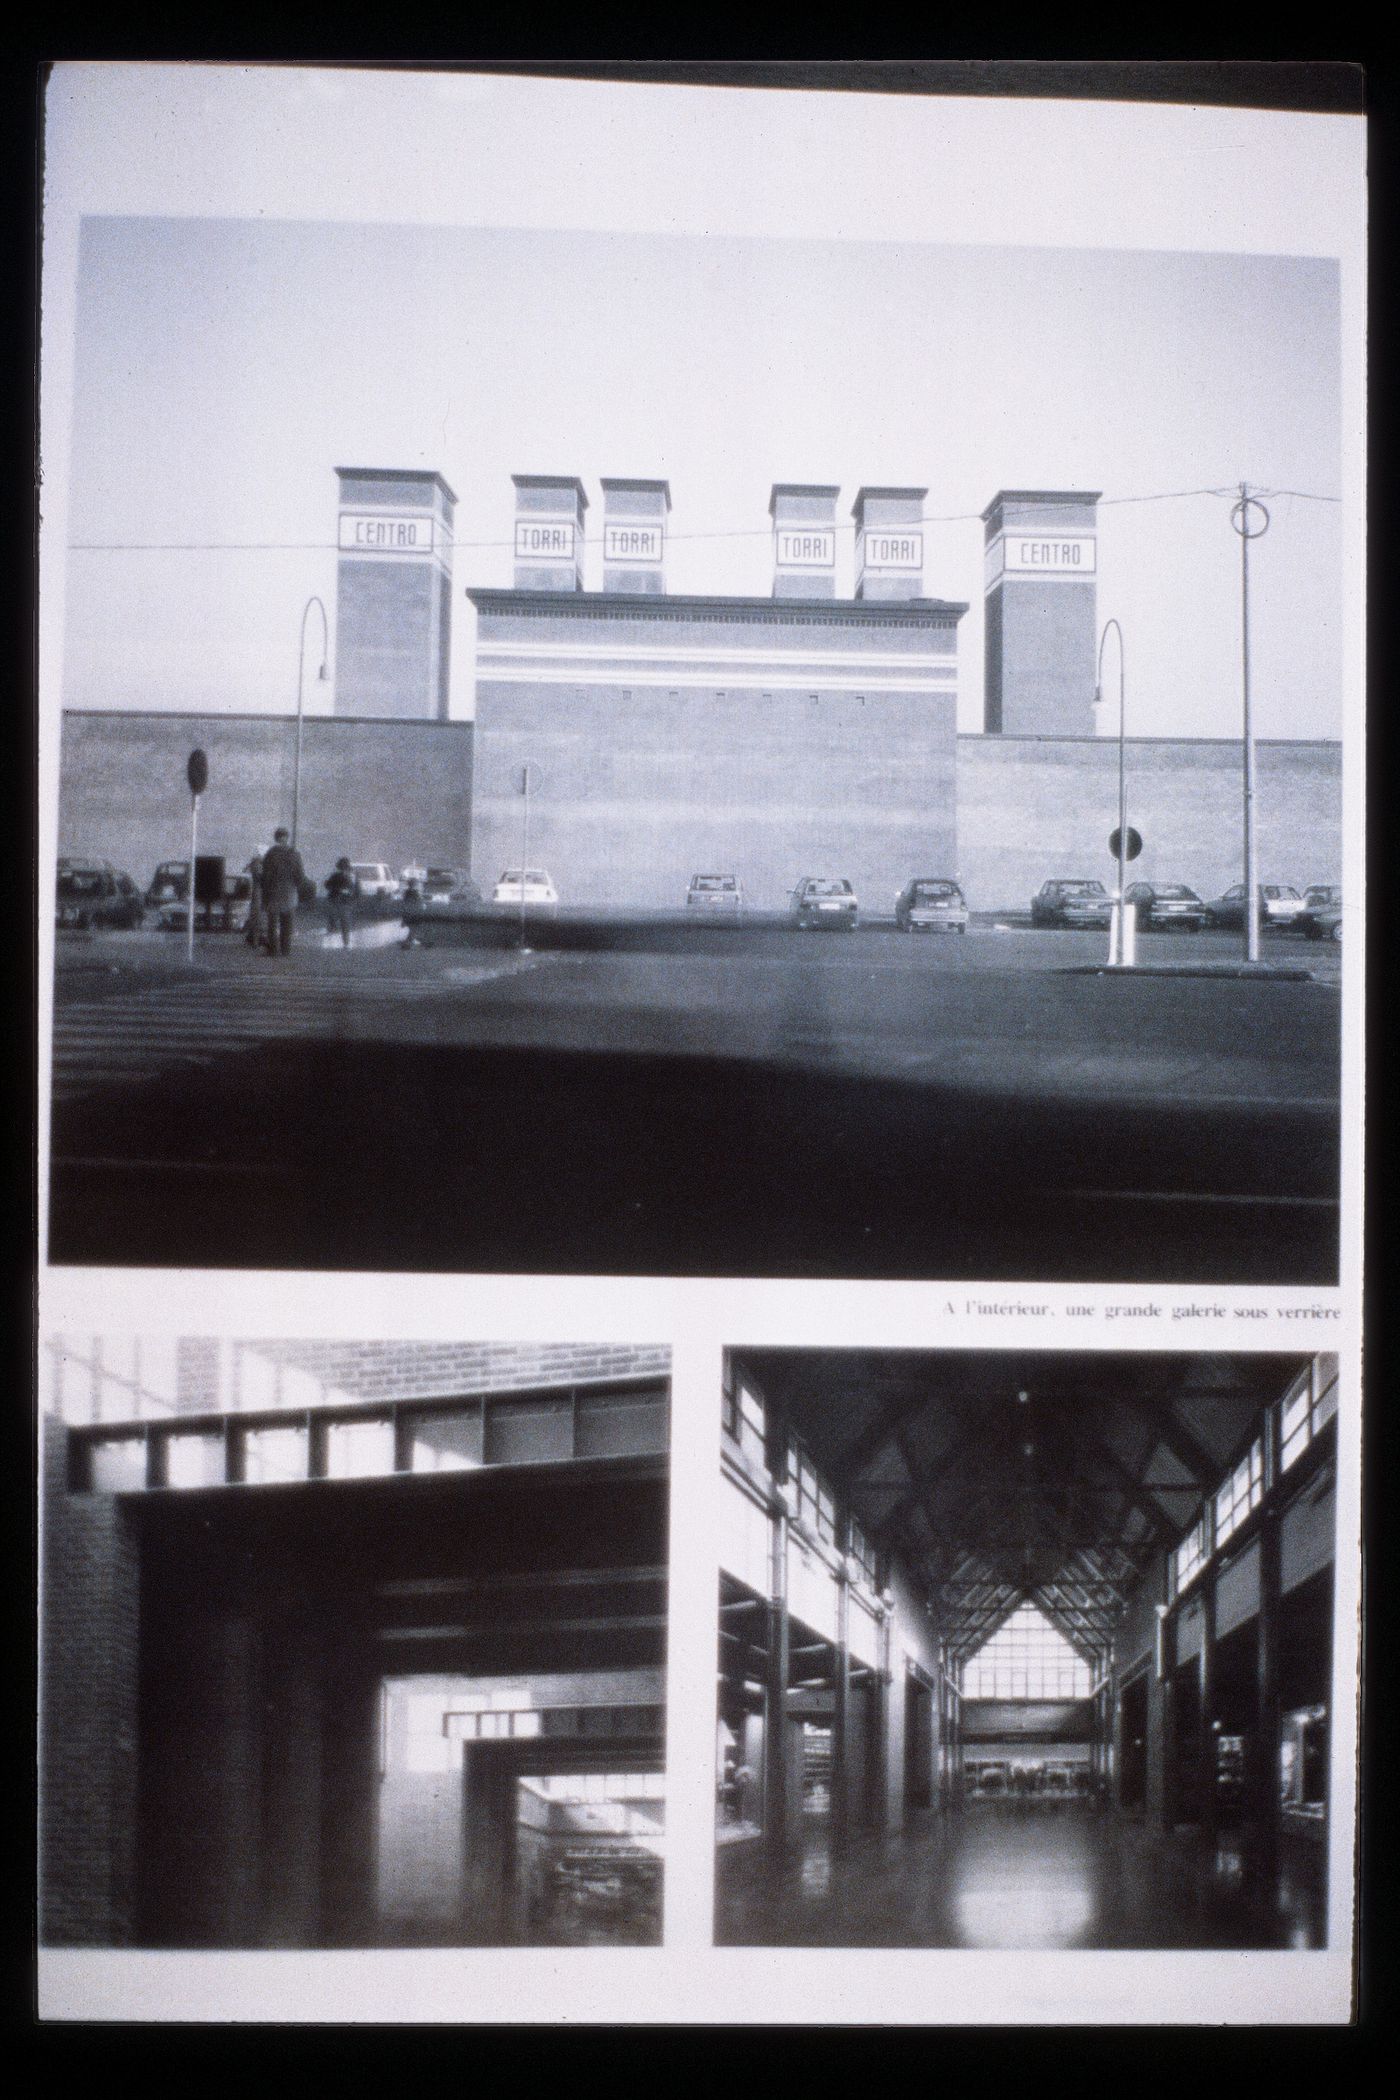 Slide of a photograph of Centro Torri shopping centre, Parma, by Aldo Rossi